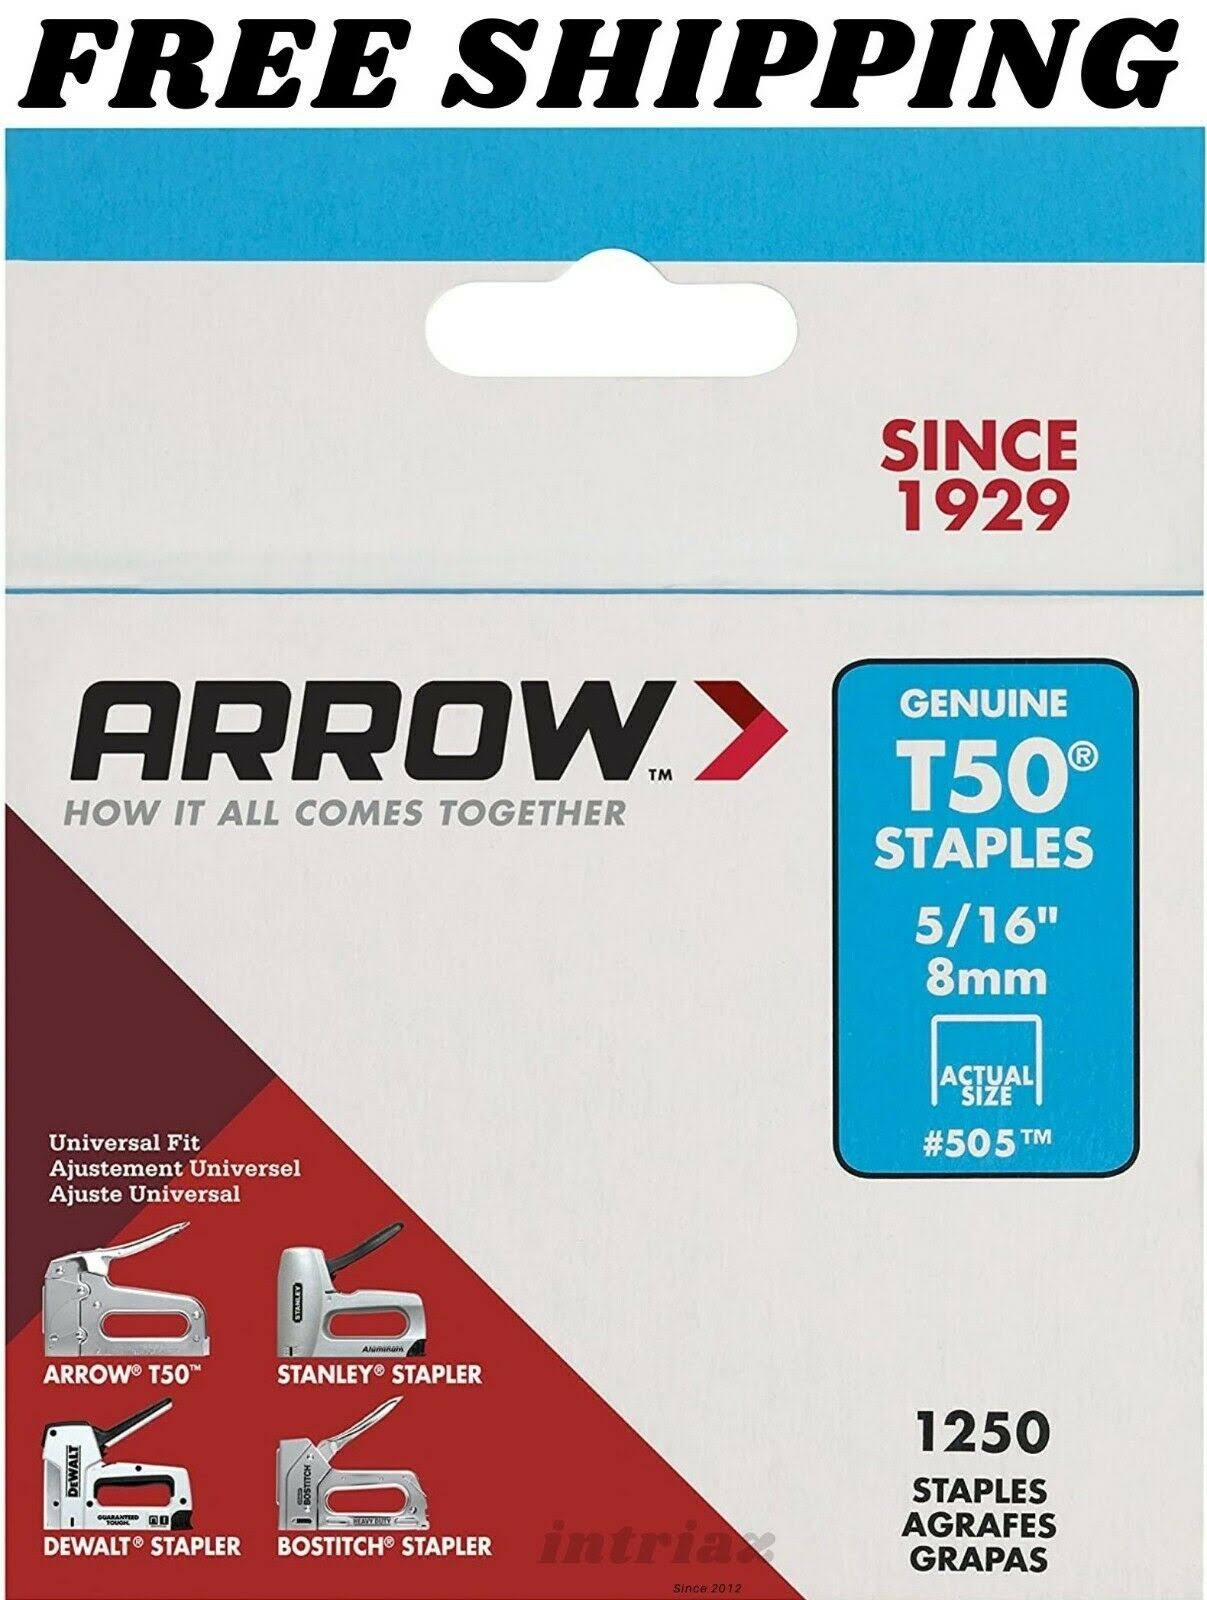 Arrow T50 Genuine Staples Manual - 8mm, 1250 Staples